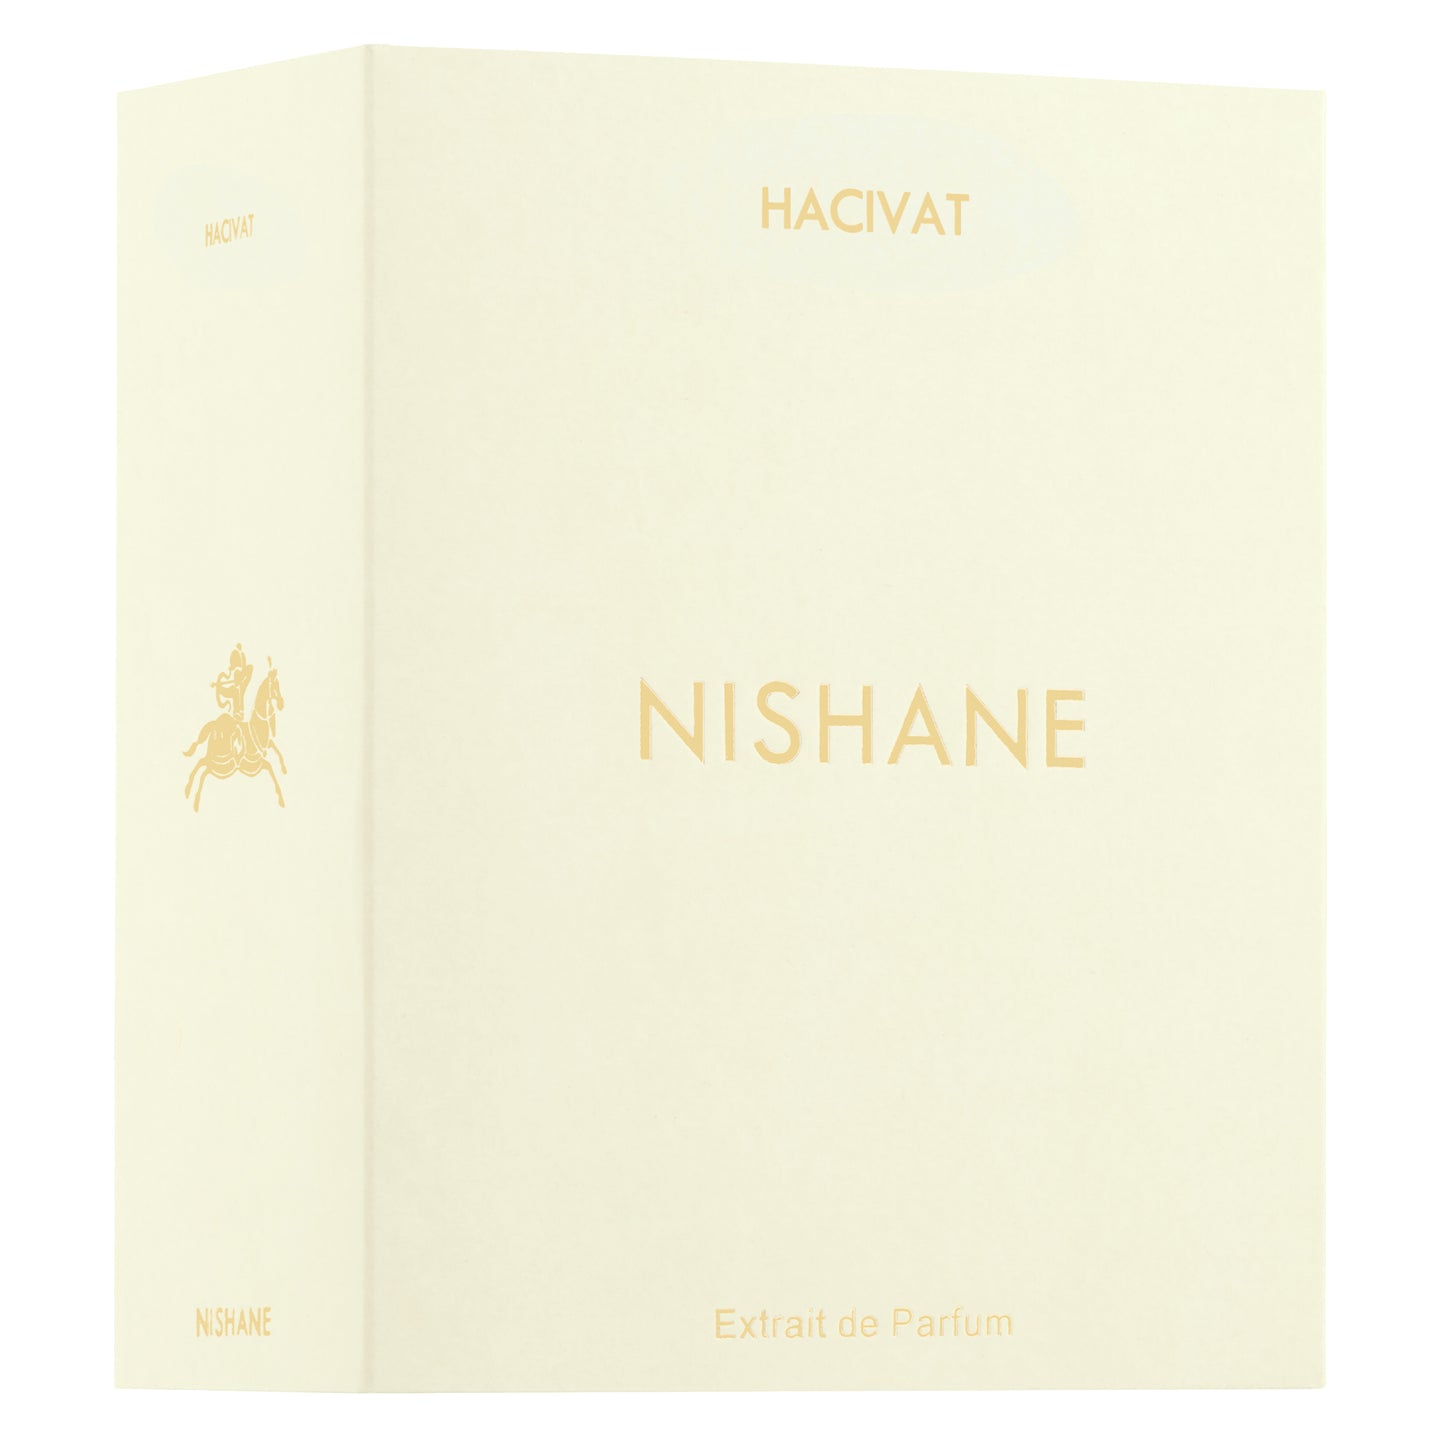 Hacivat Nishane Extrait de Parfum